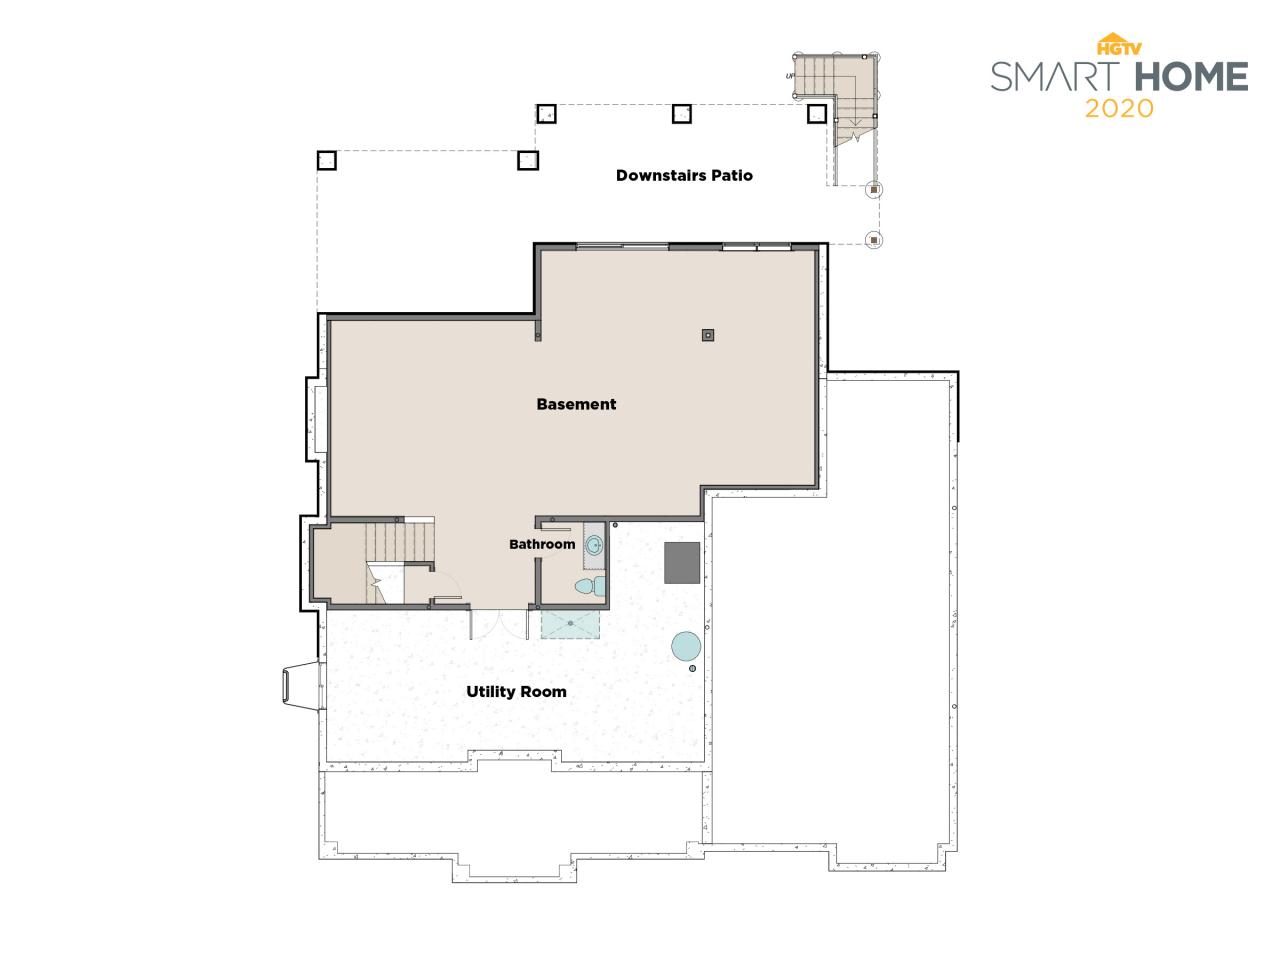 Hgtv Smart Home Floor Plans Floor Roma